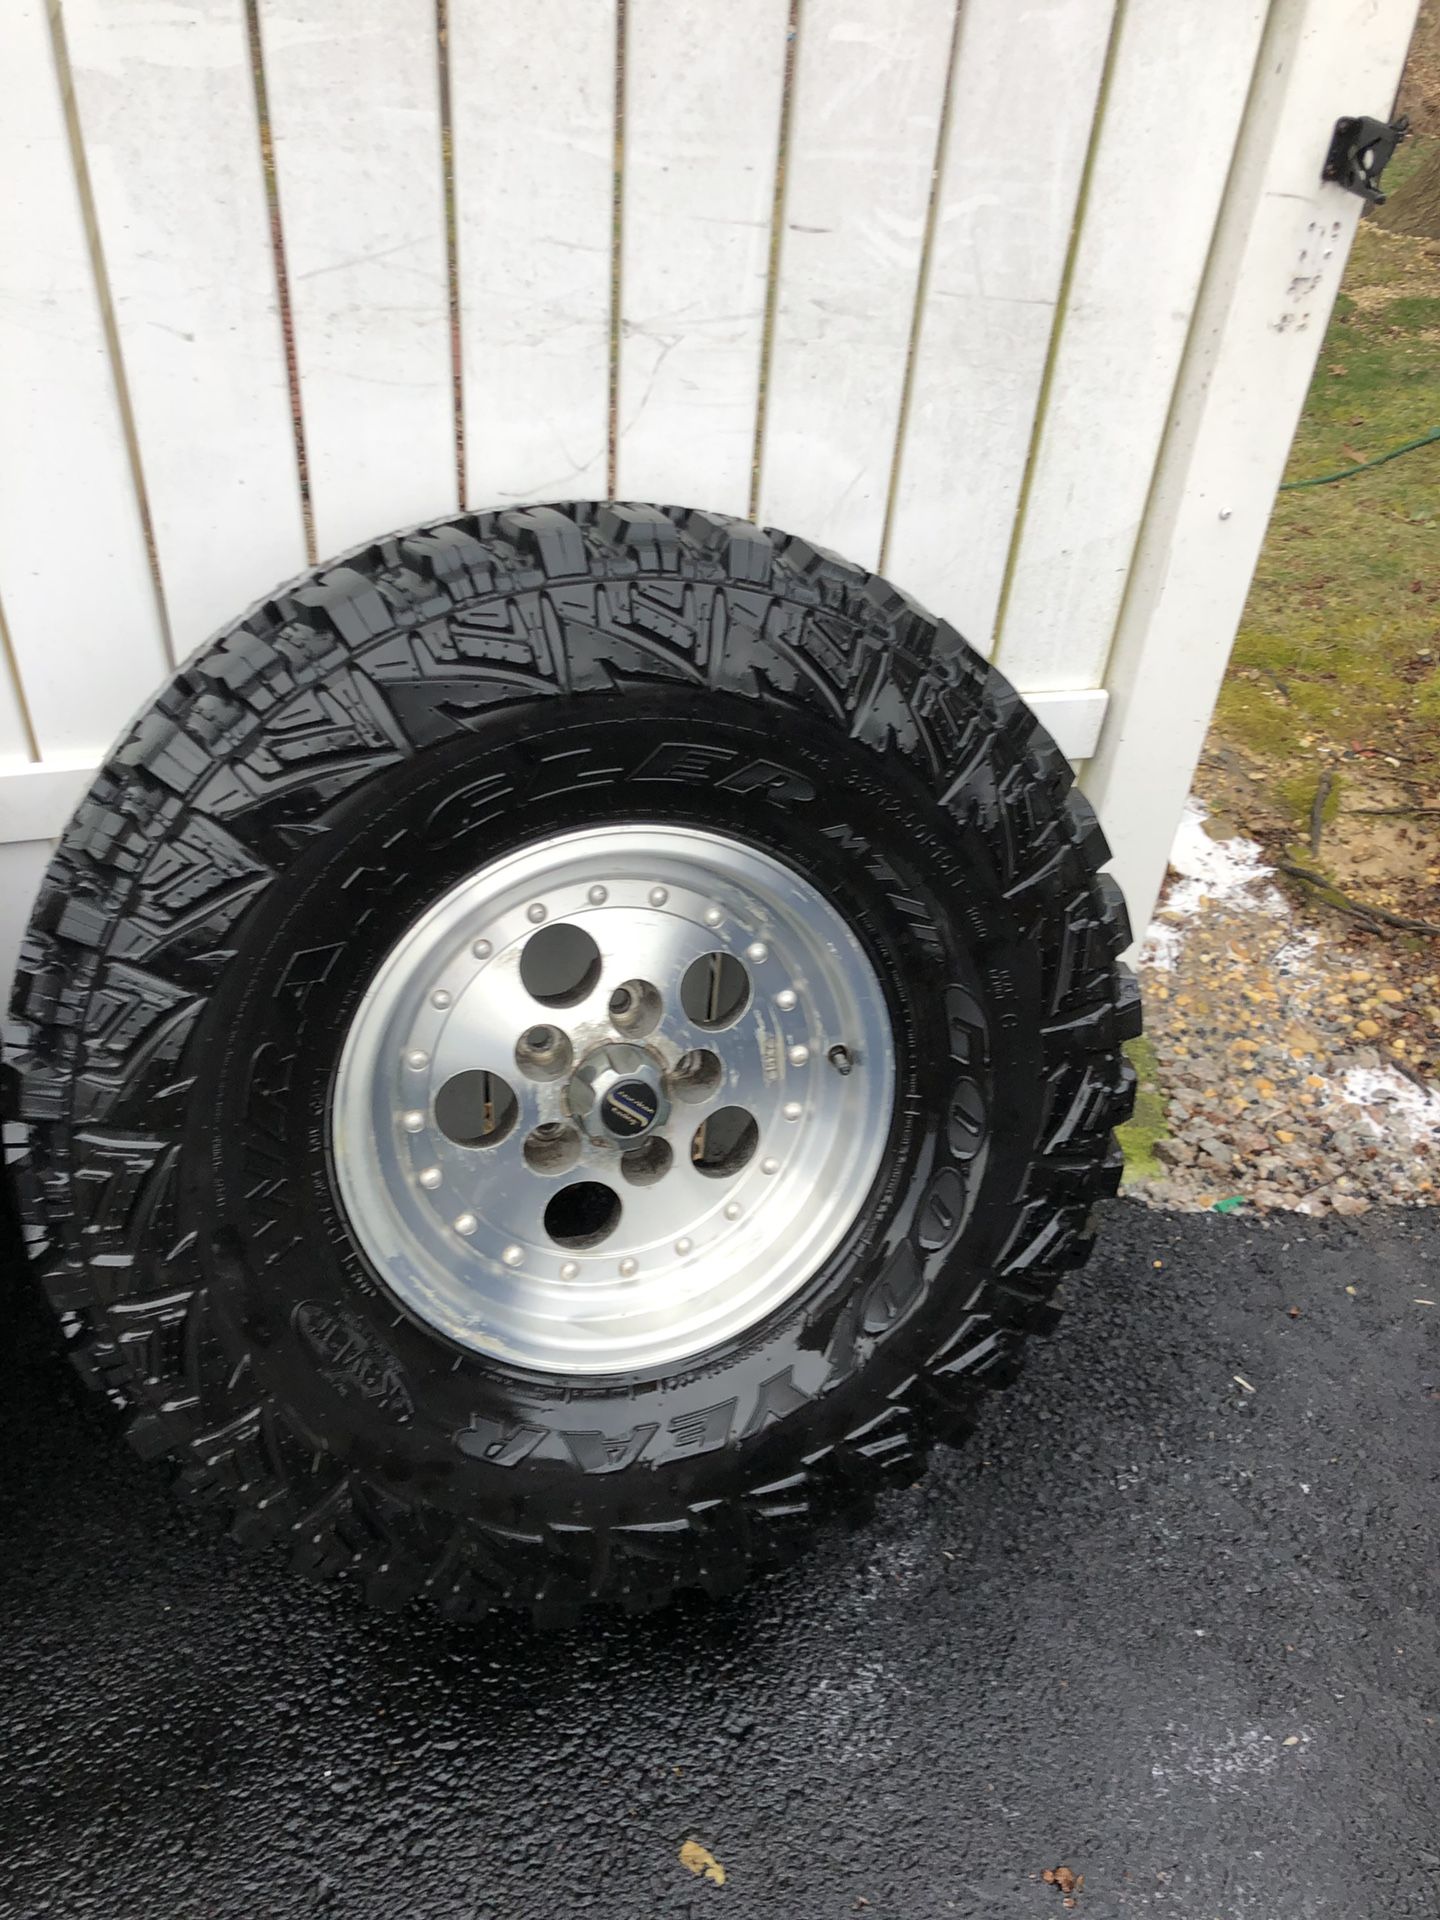 Single new tire